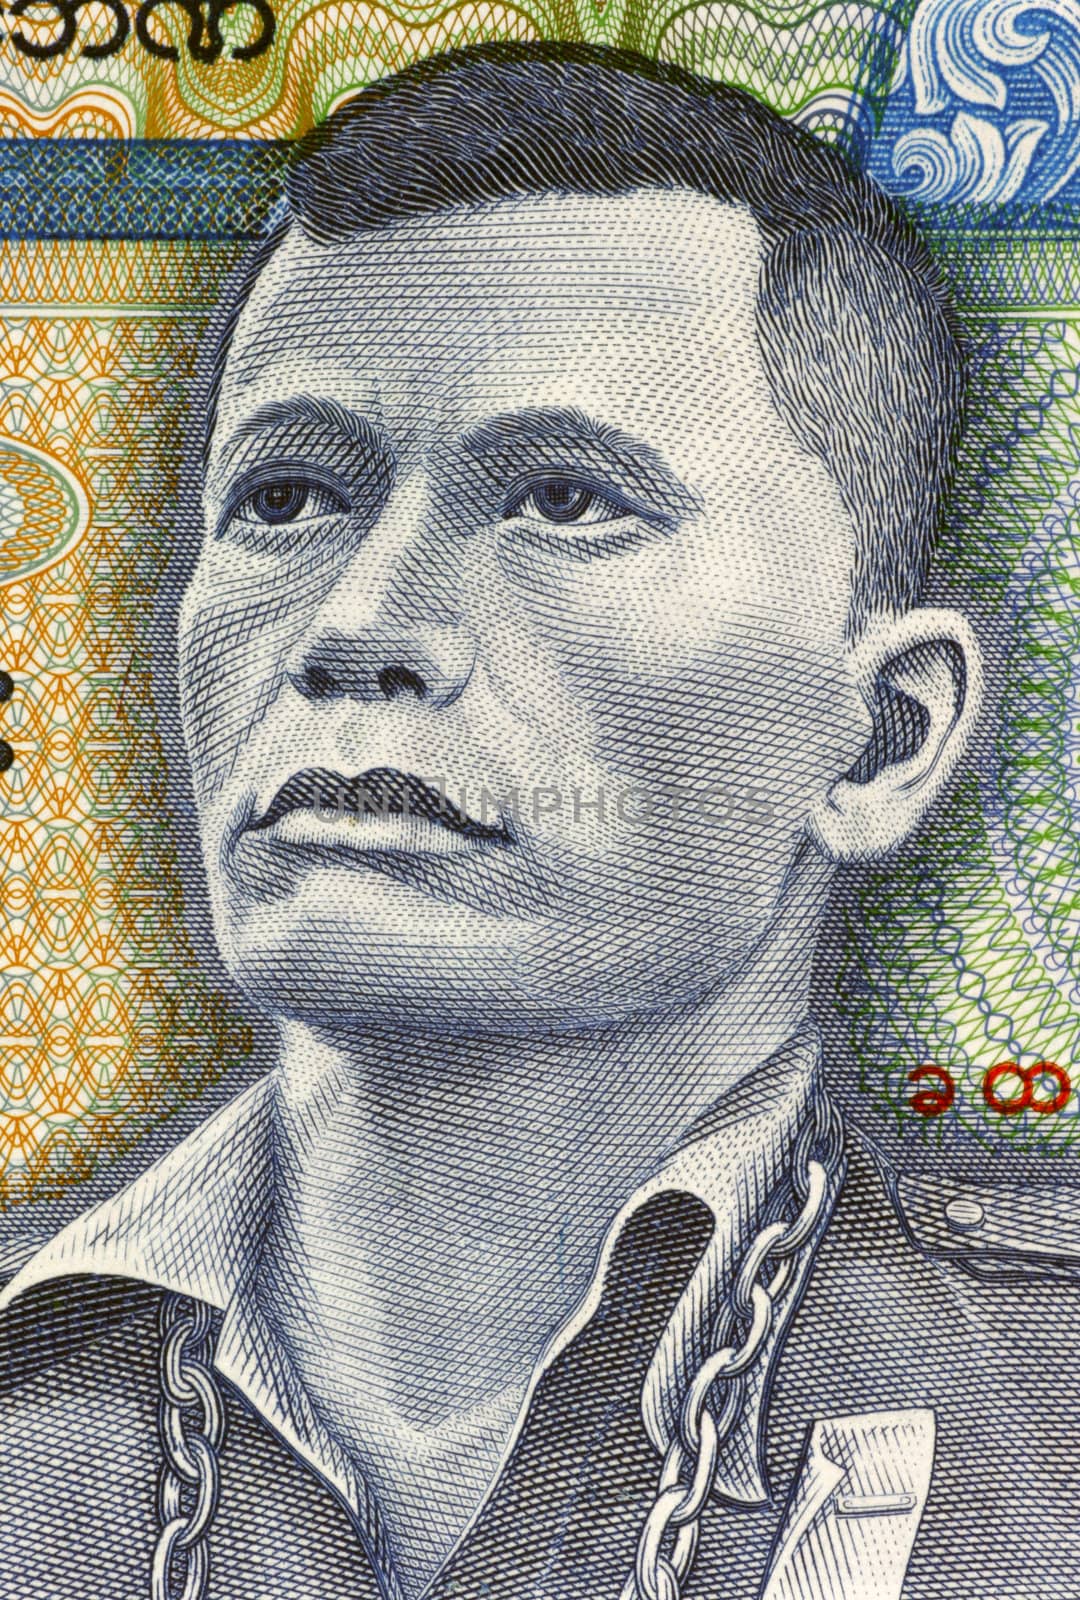 Thakin Po Hla Gyi on 45 Kyats 1987 Banknote from Burma.